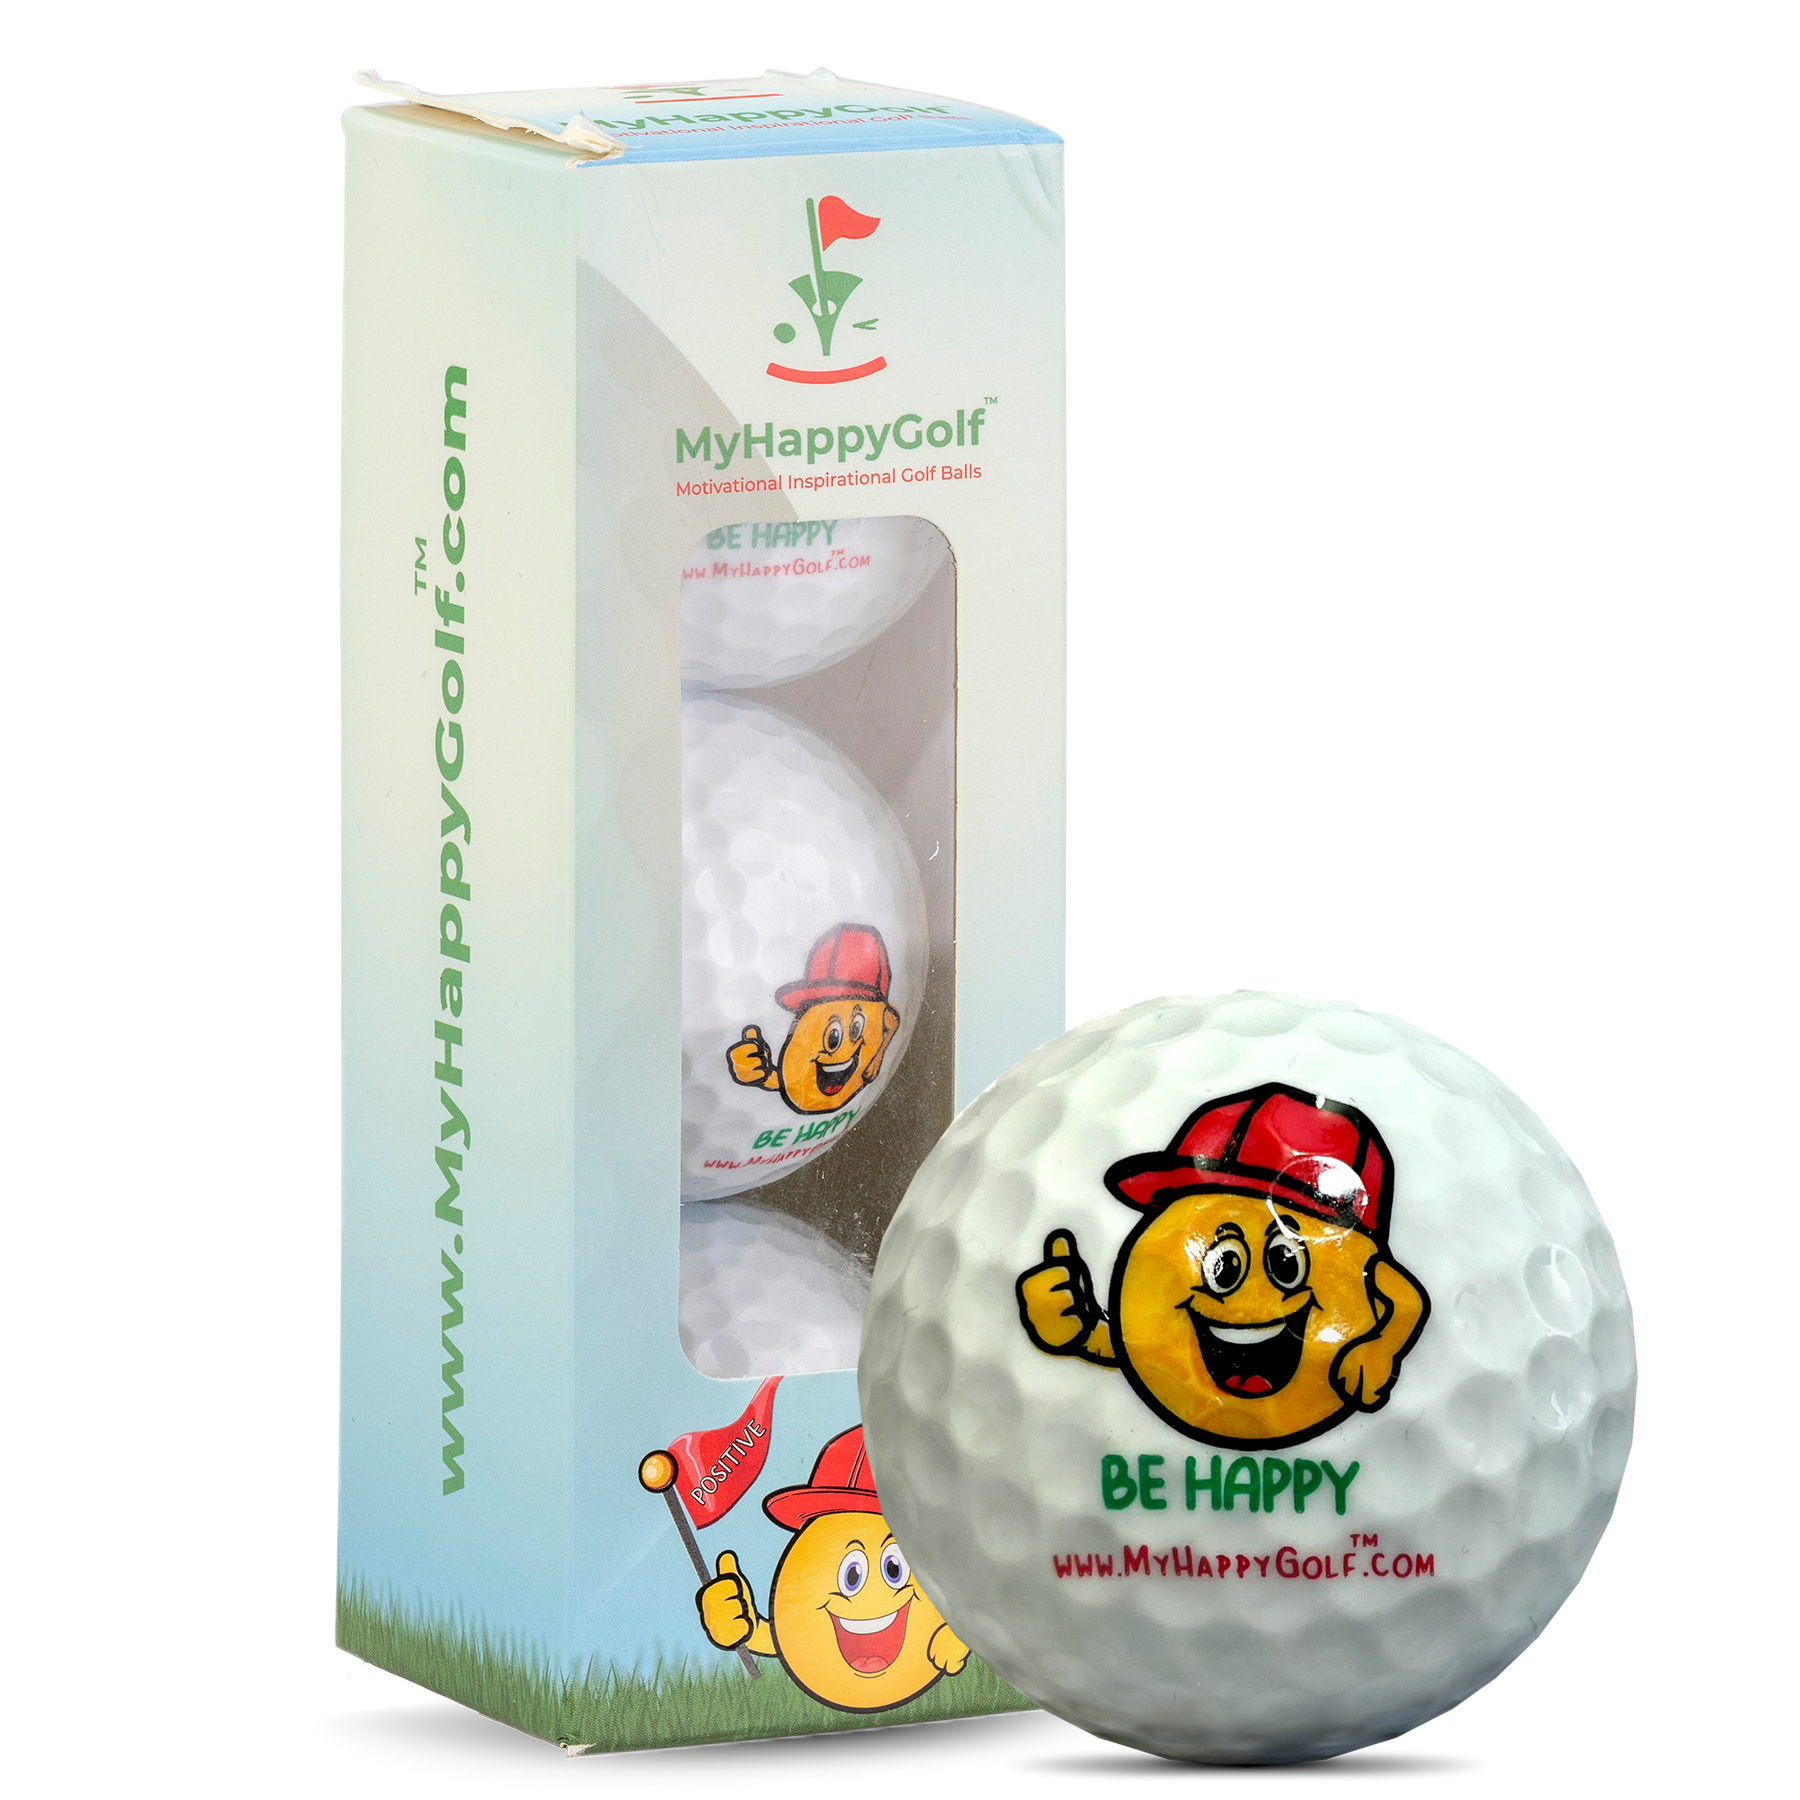  Happyyami 10 Pcs Ball Stud Funny Golf Tee Golf Ball